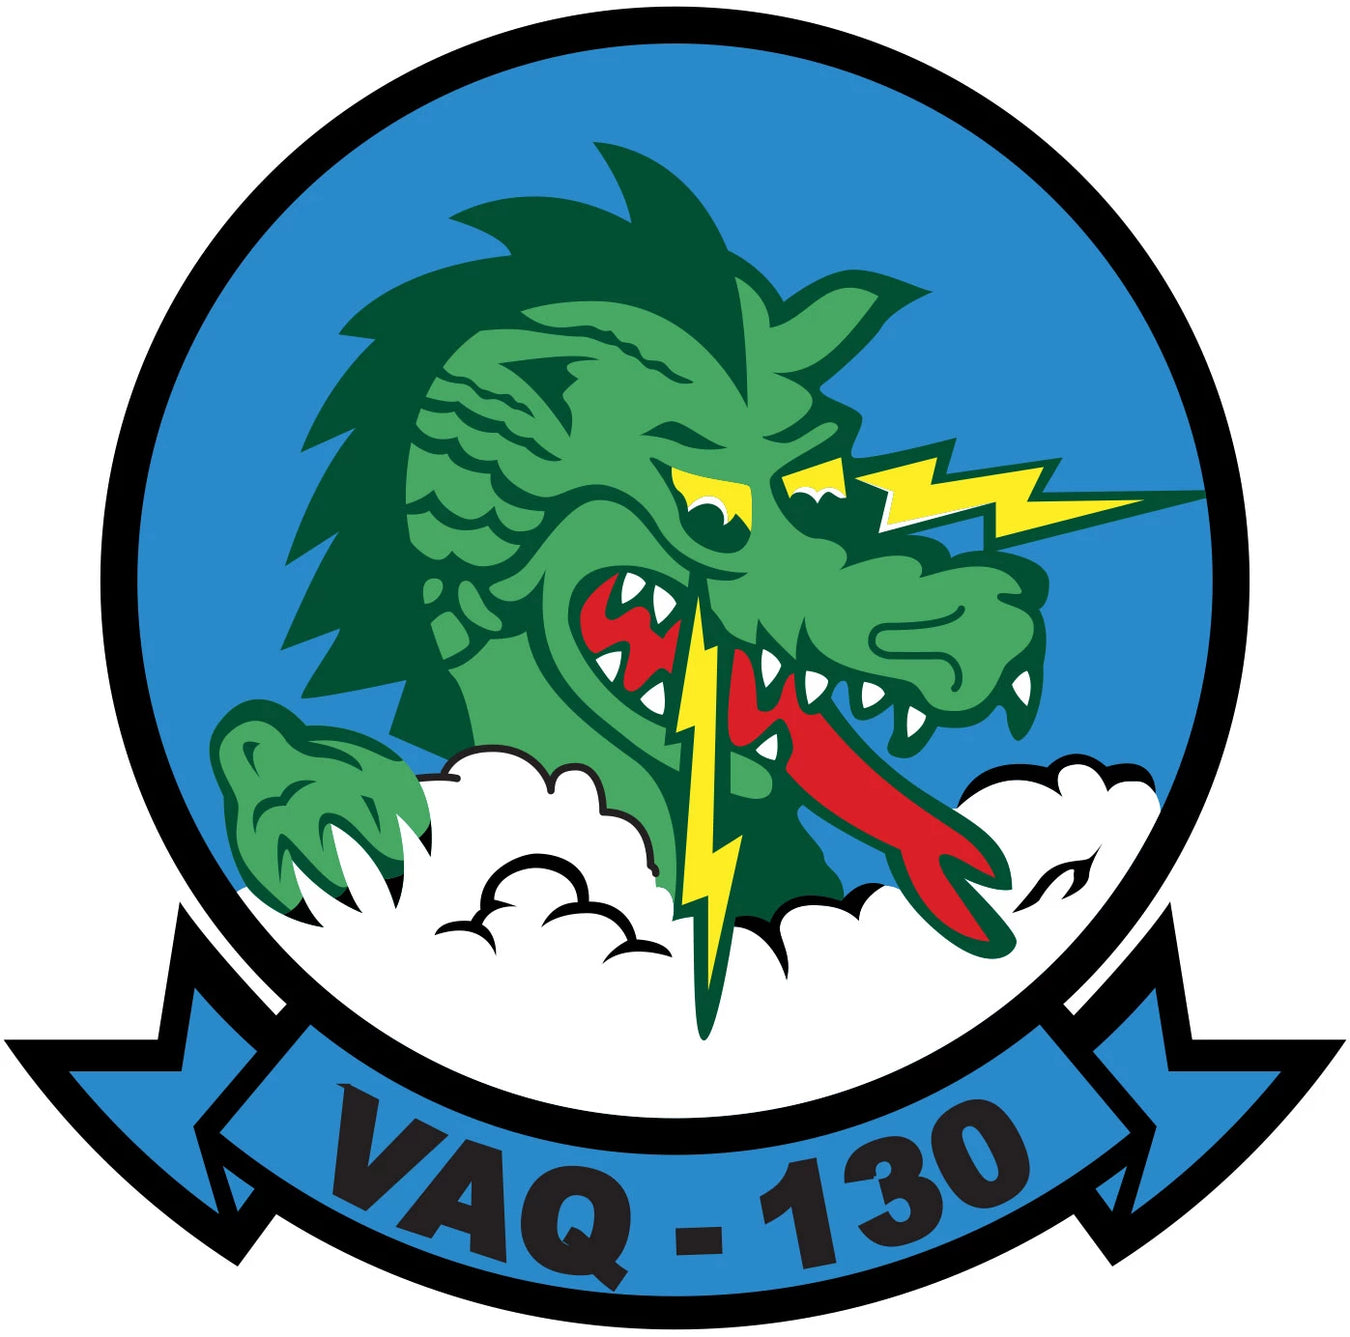 Electronic Attack Squadron 130 (VAQ-130)